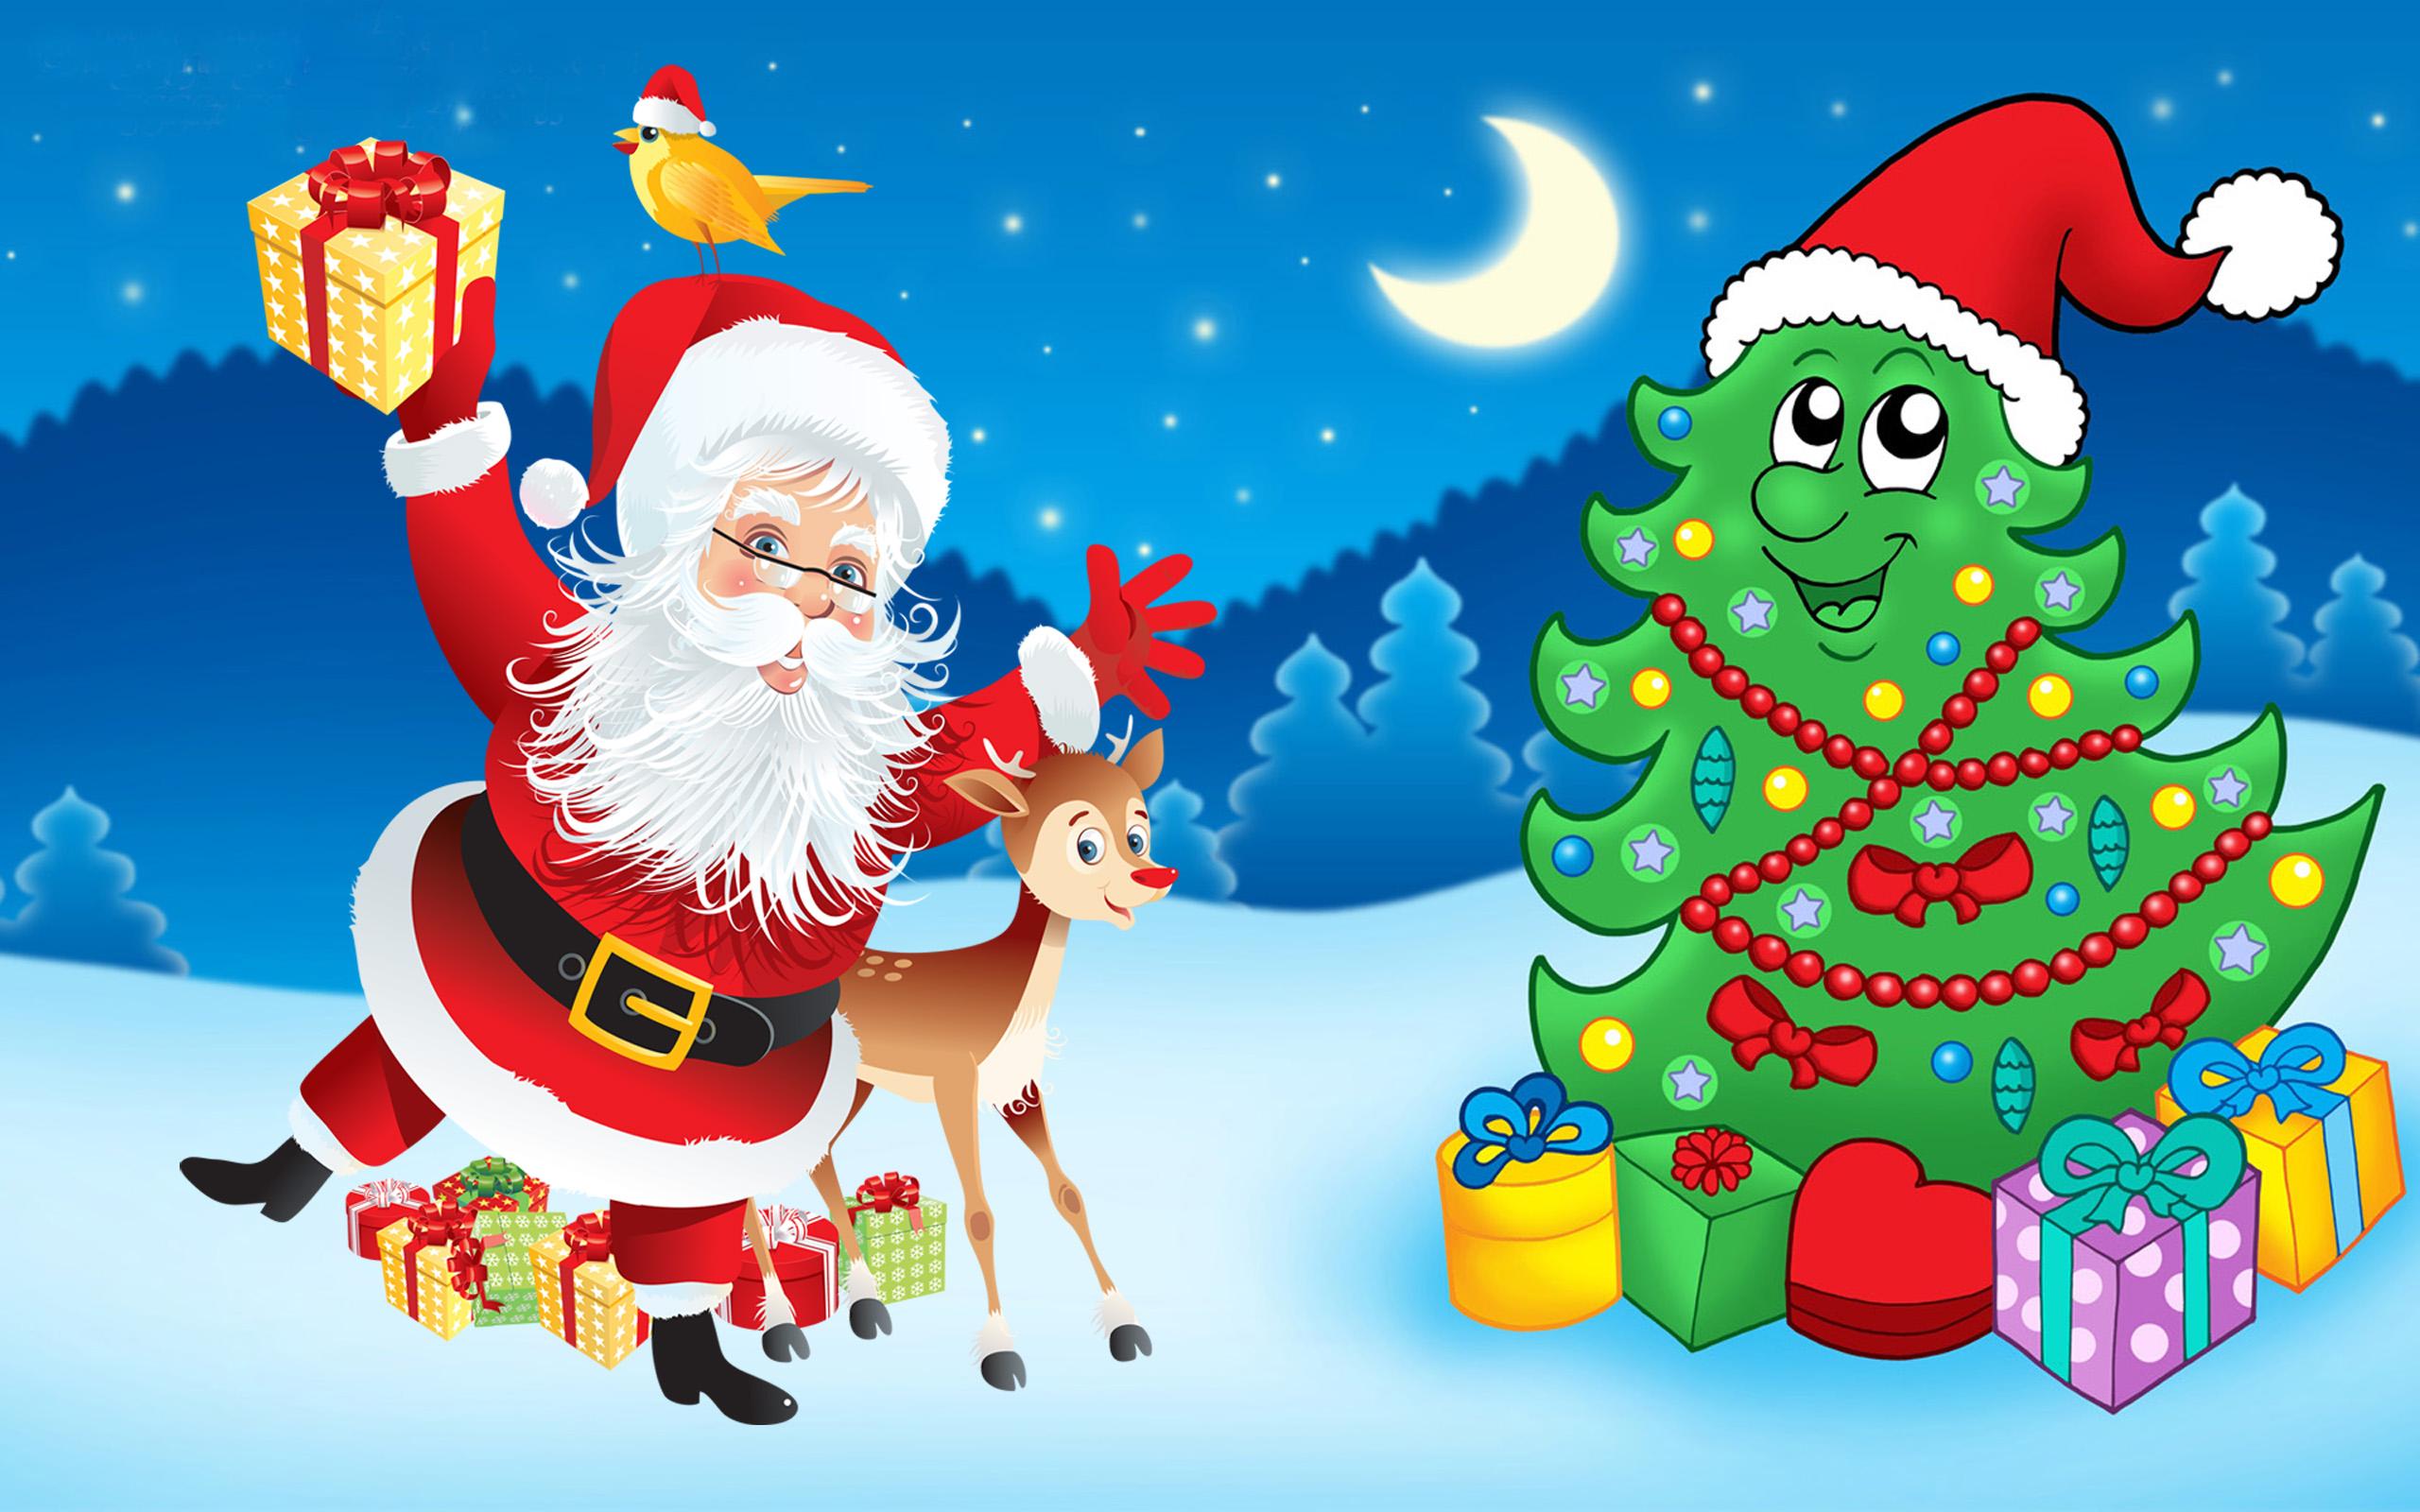 Santa Claus Christmas Tree Decorations Gifts Cartoon Christmas Wallpaper HD 2560x1600, Wallpaper13.com